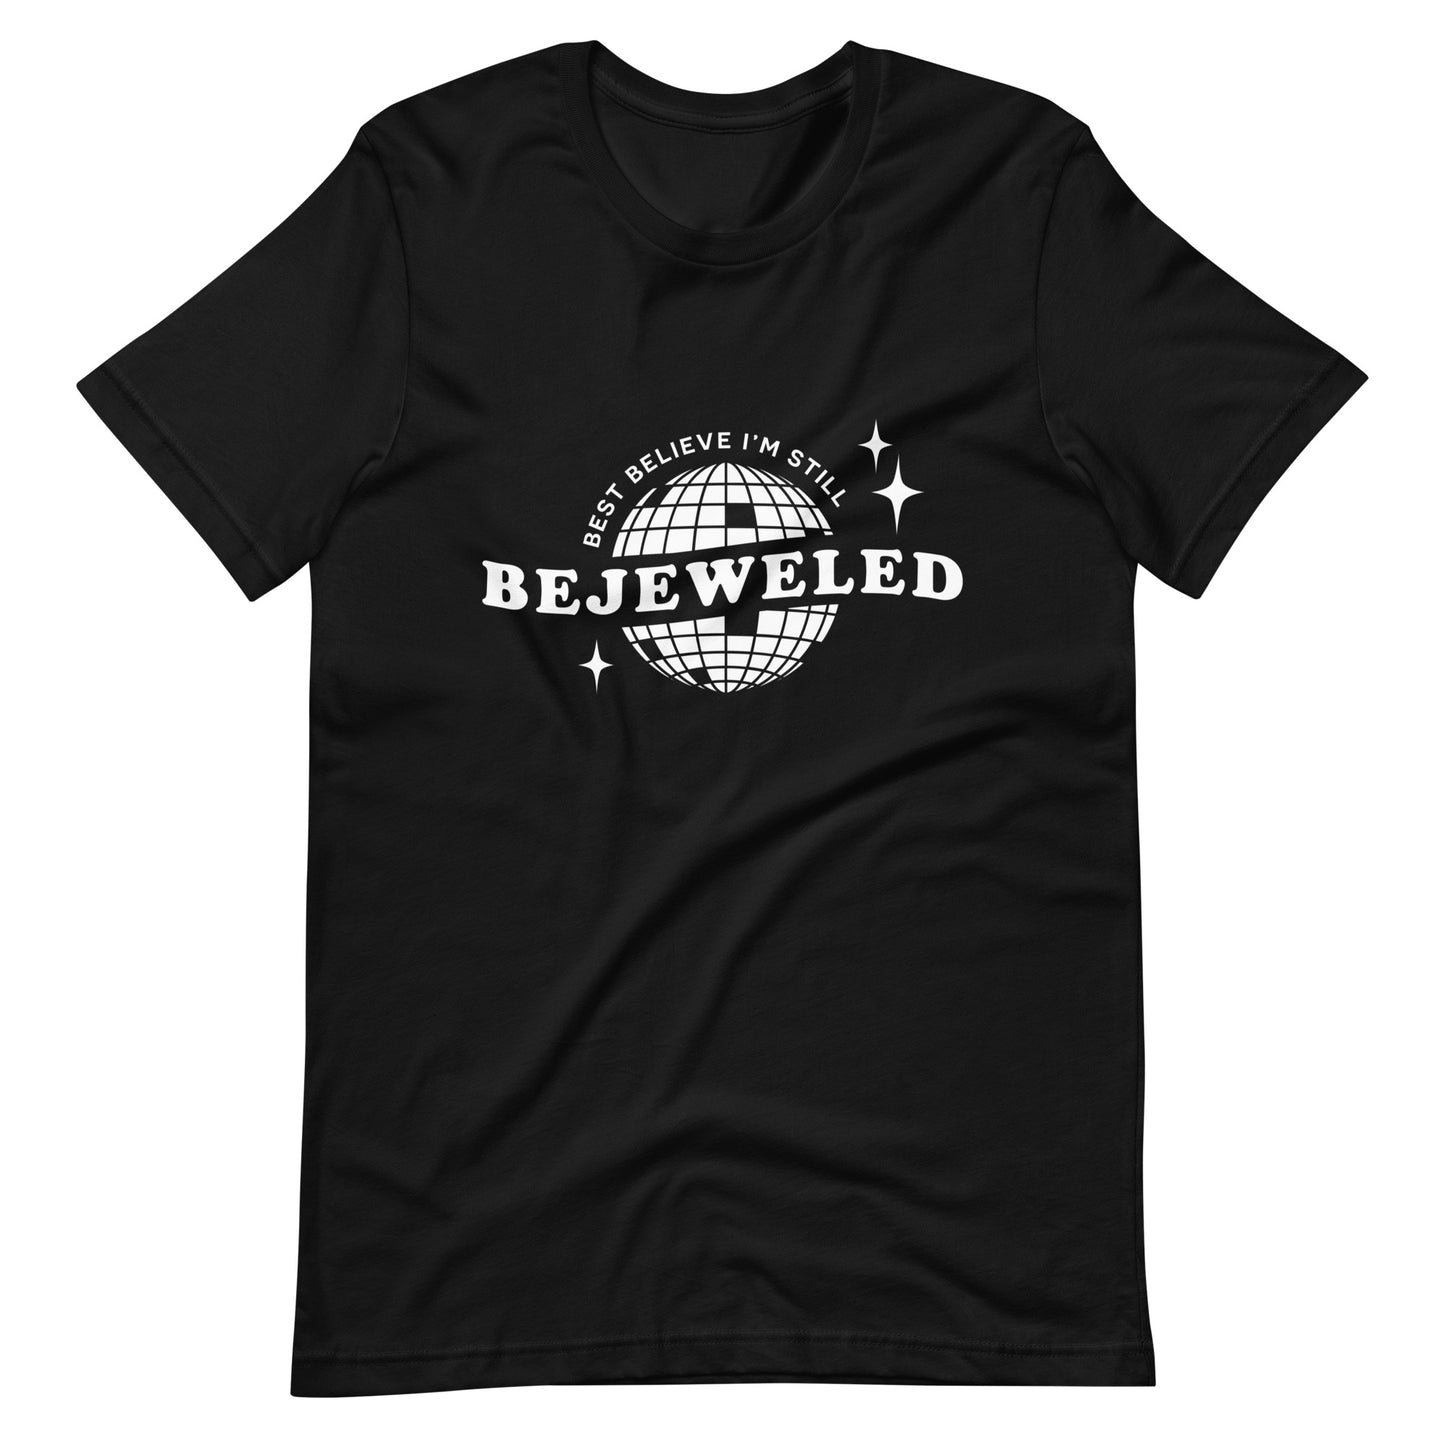 Still Bejeweled T-shirt - multiple color options